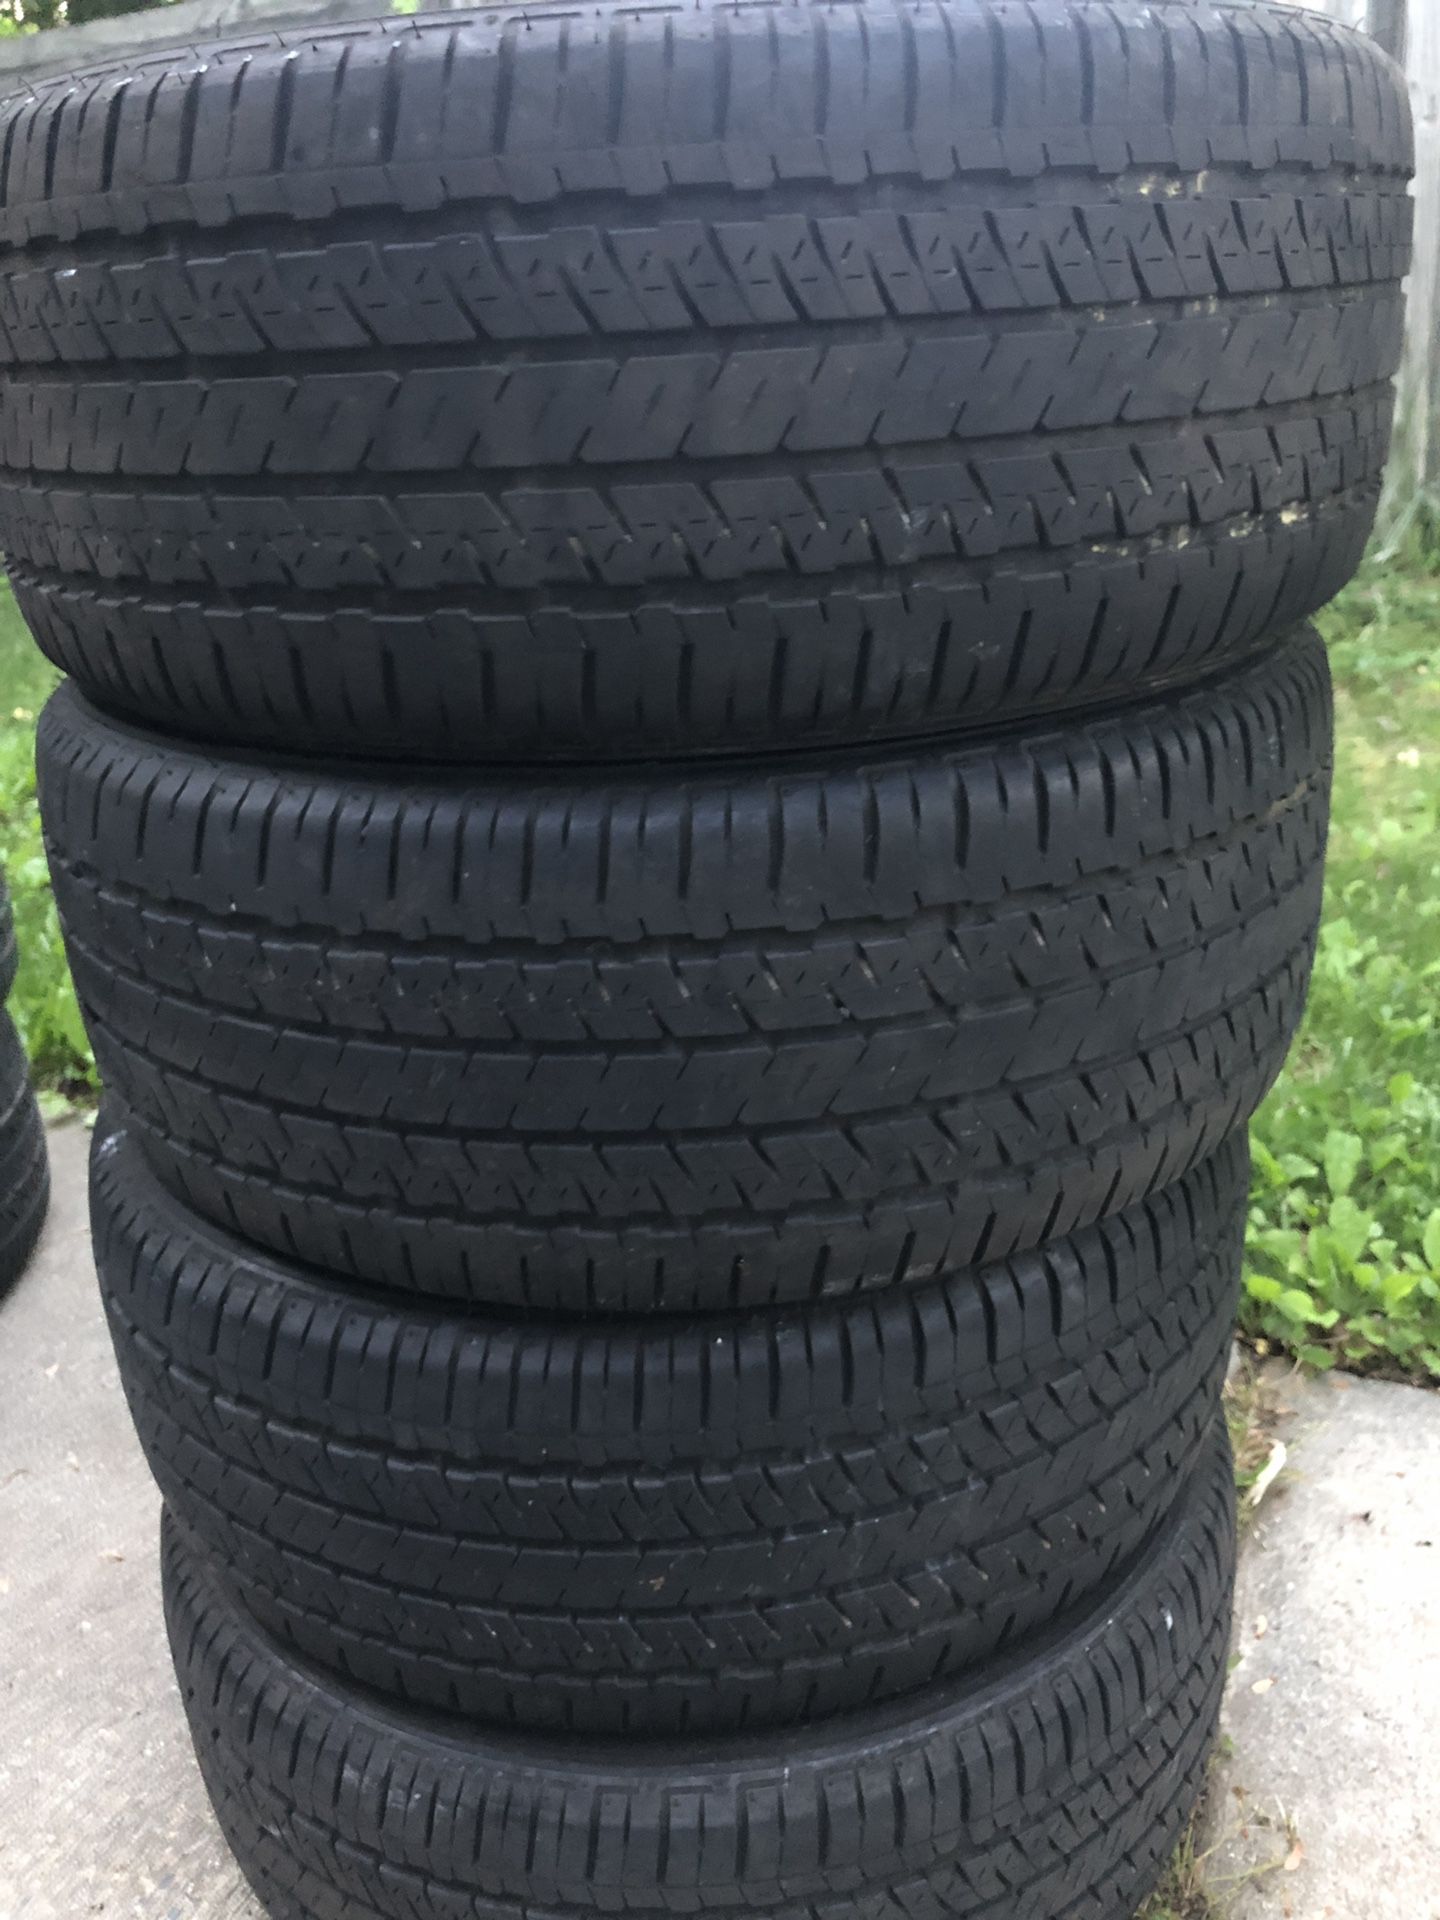 4 good use tires Firestone 215/45/17